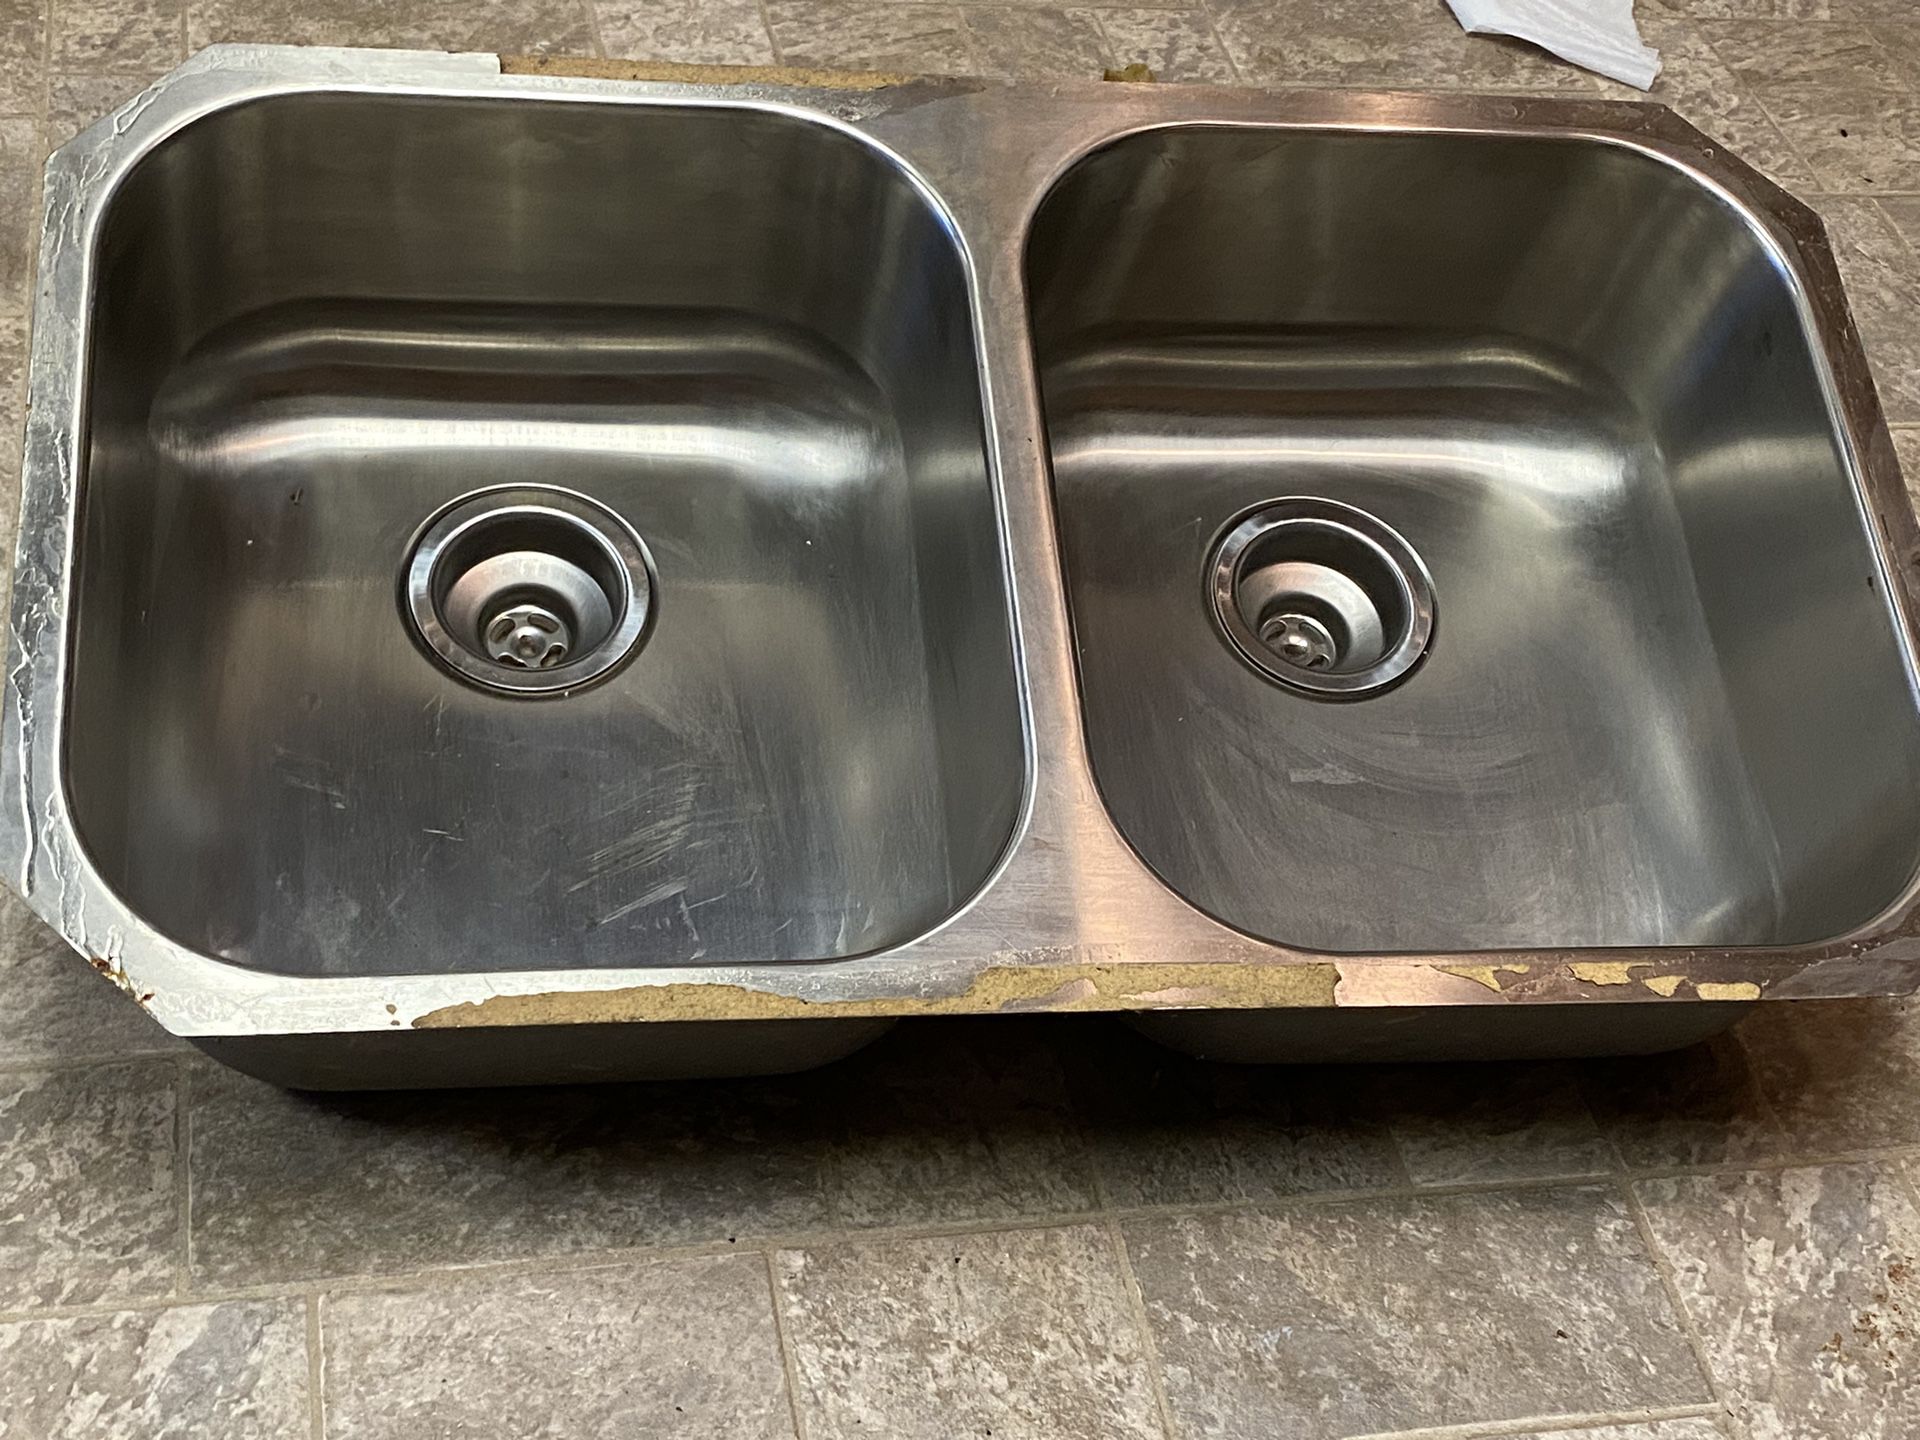 32 in. Undermount Double Bowl 18 Gauge 304 Stainless Steel Kitchen Sink